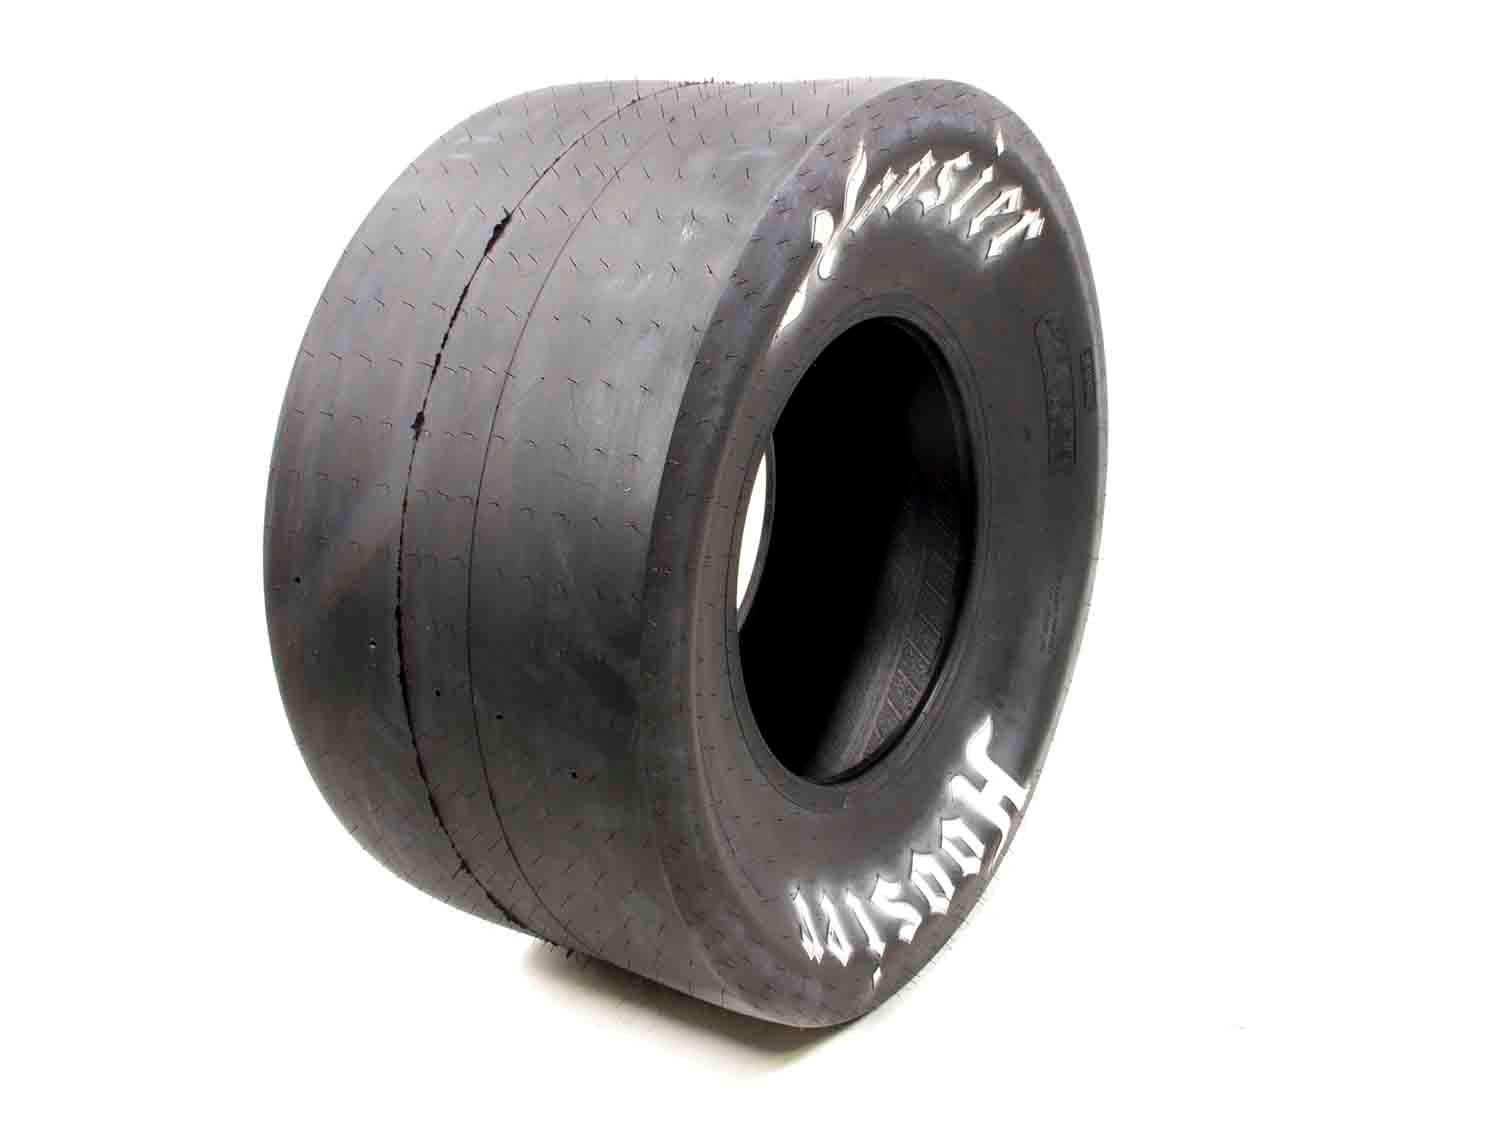 30.0/10.5-15 Drag Tire - Burlile Performance Products